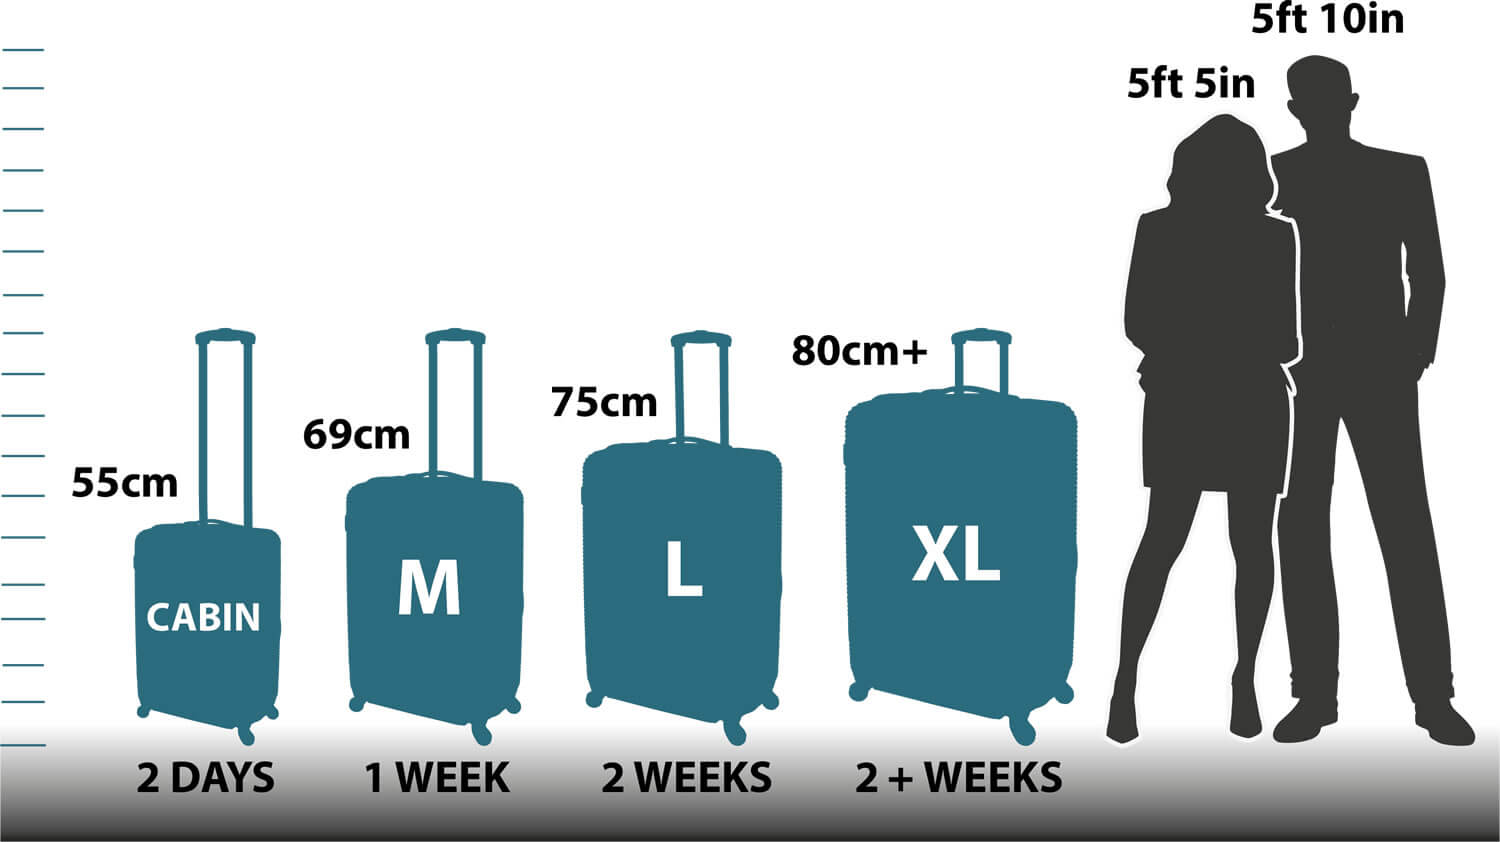 7 day trip luggage size